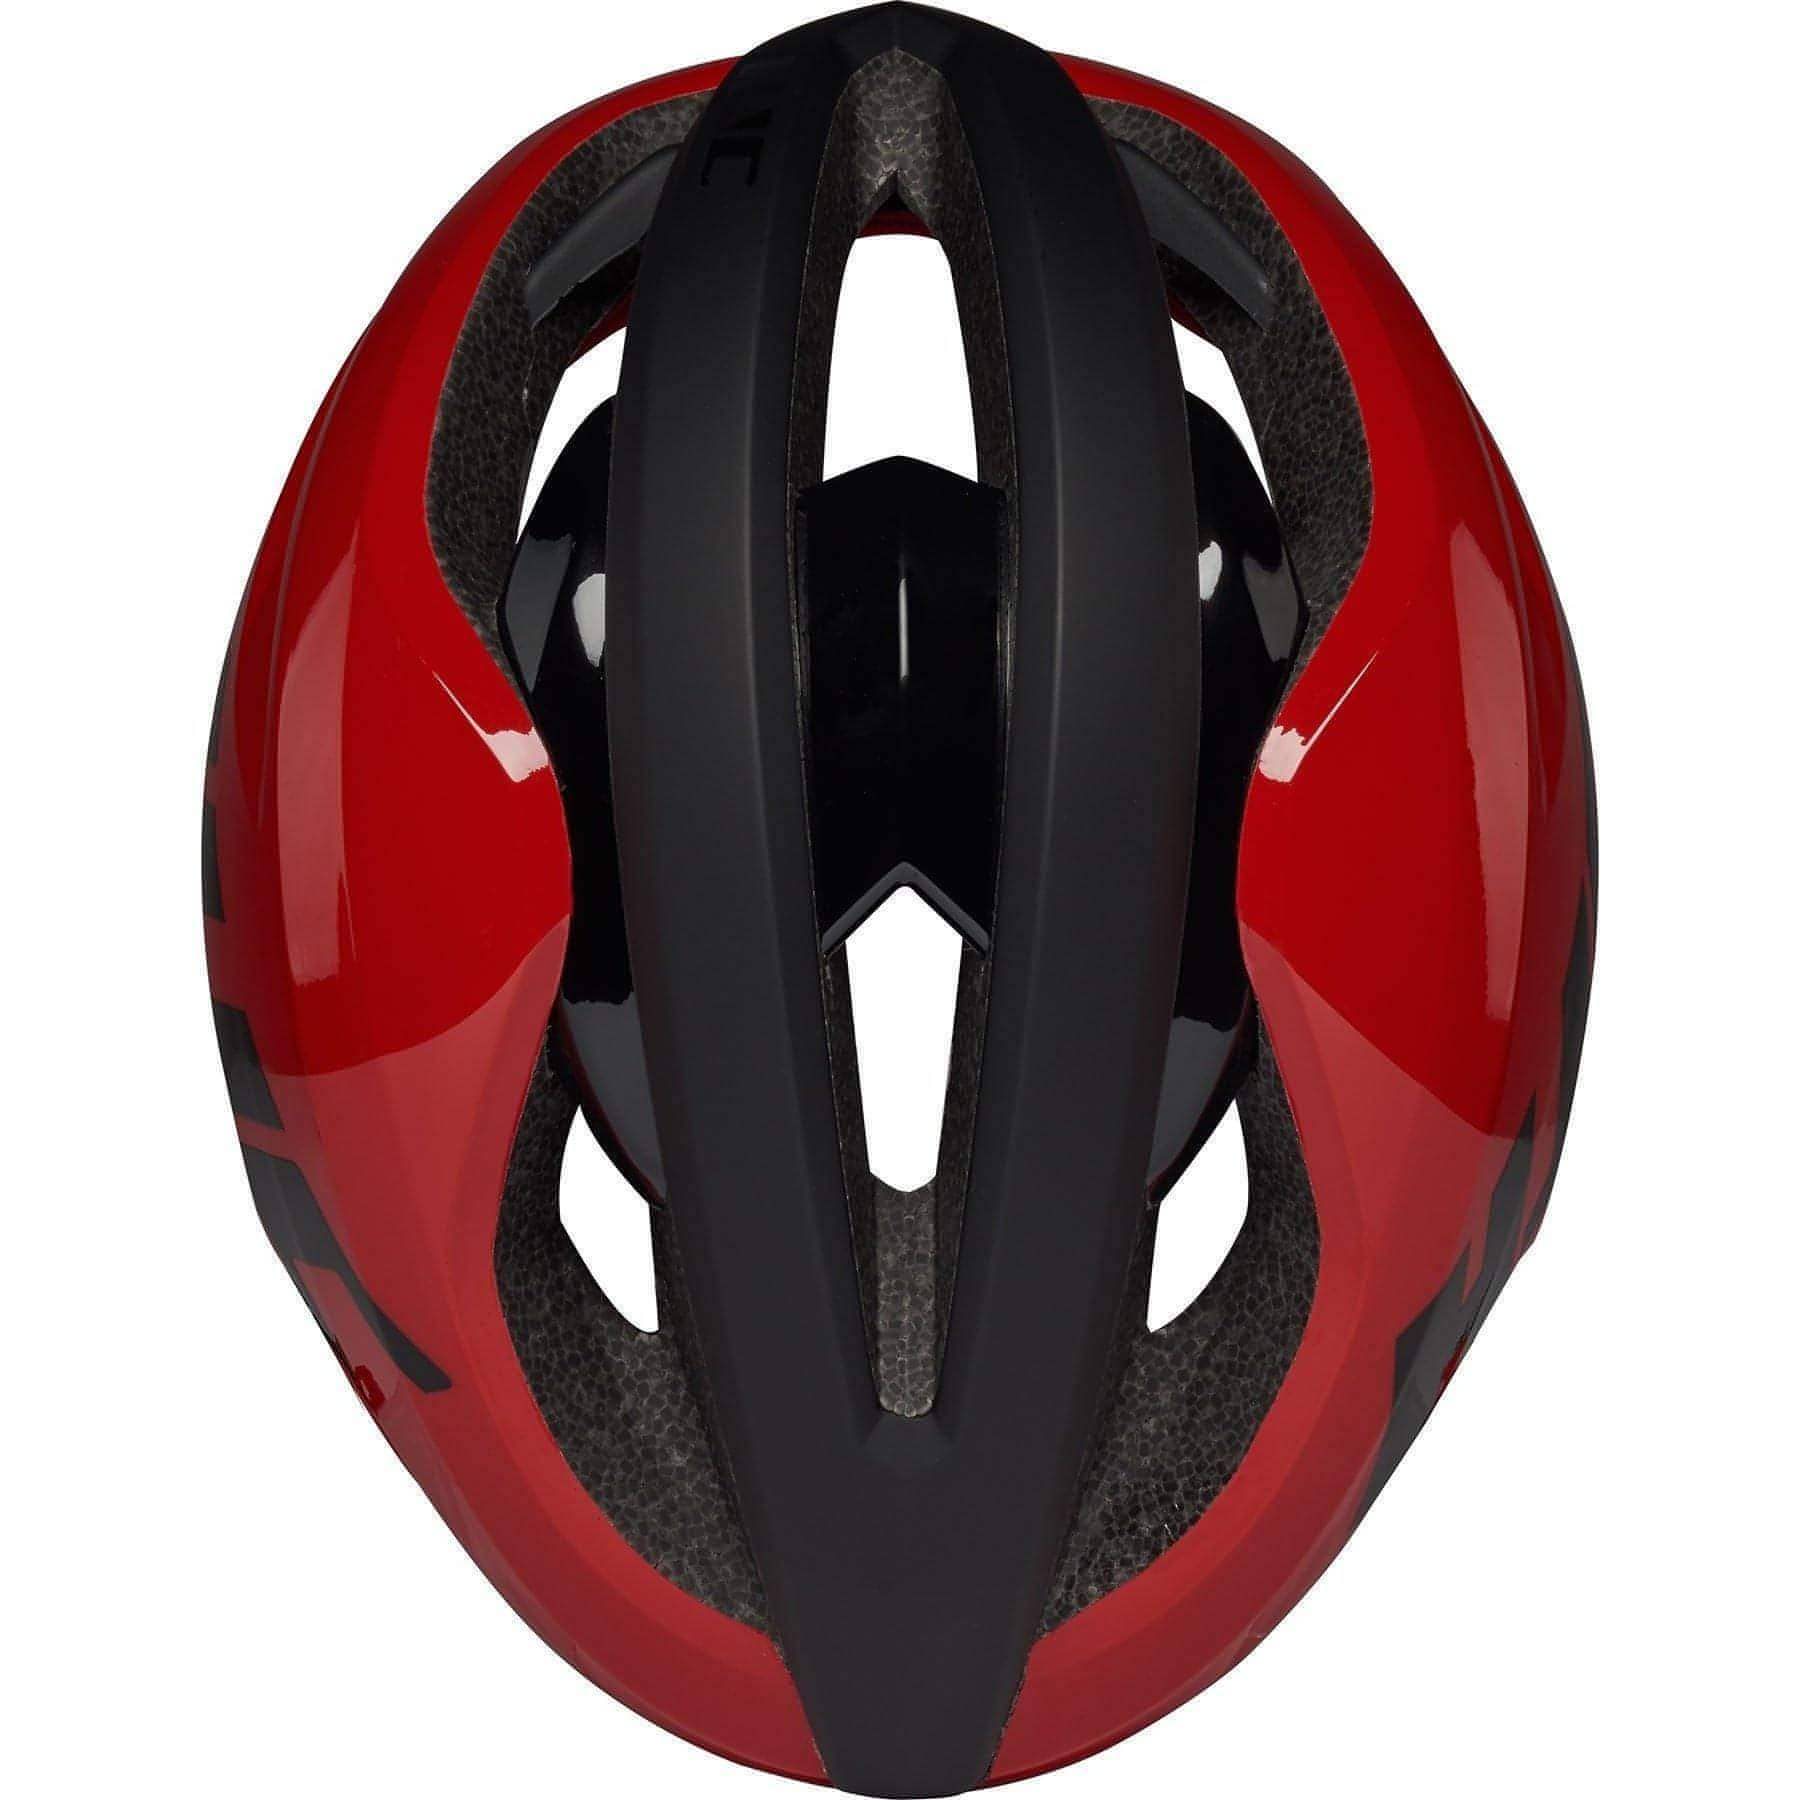 HJC Valeco Road Cycling Helmet - Red - Start Fitness